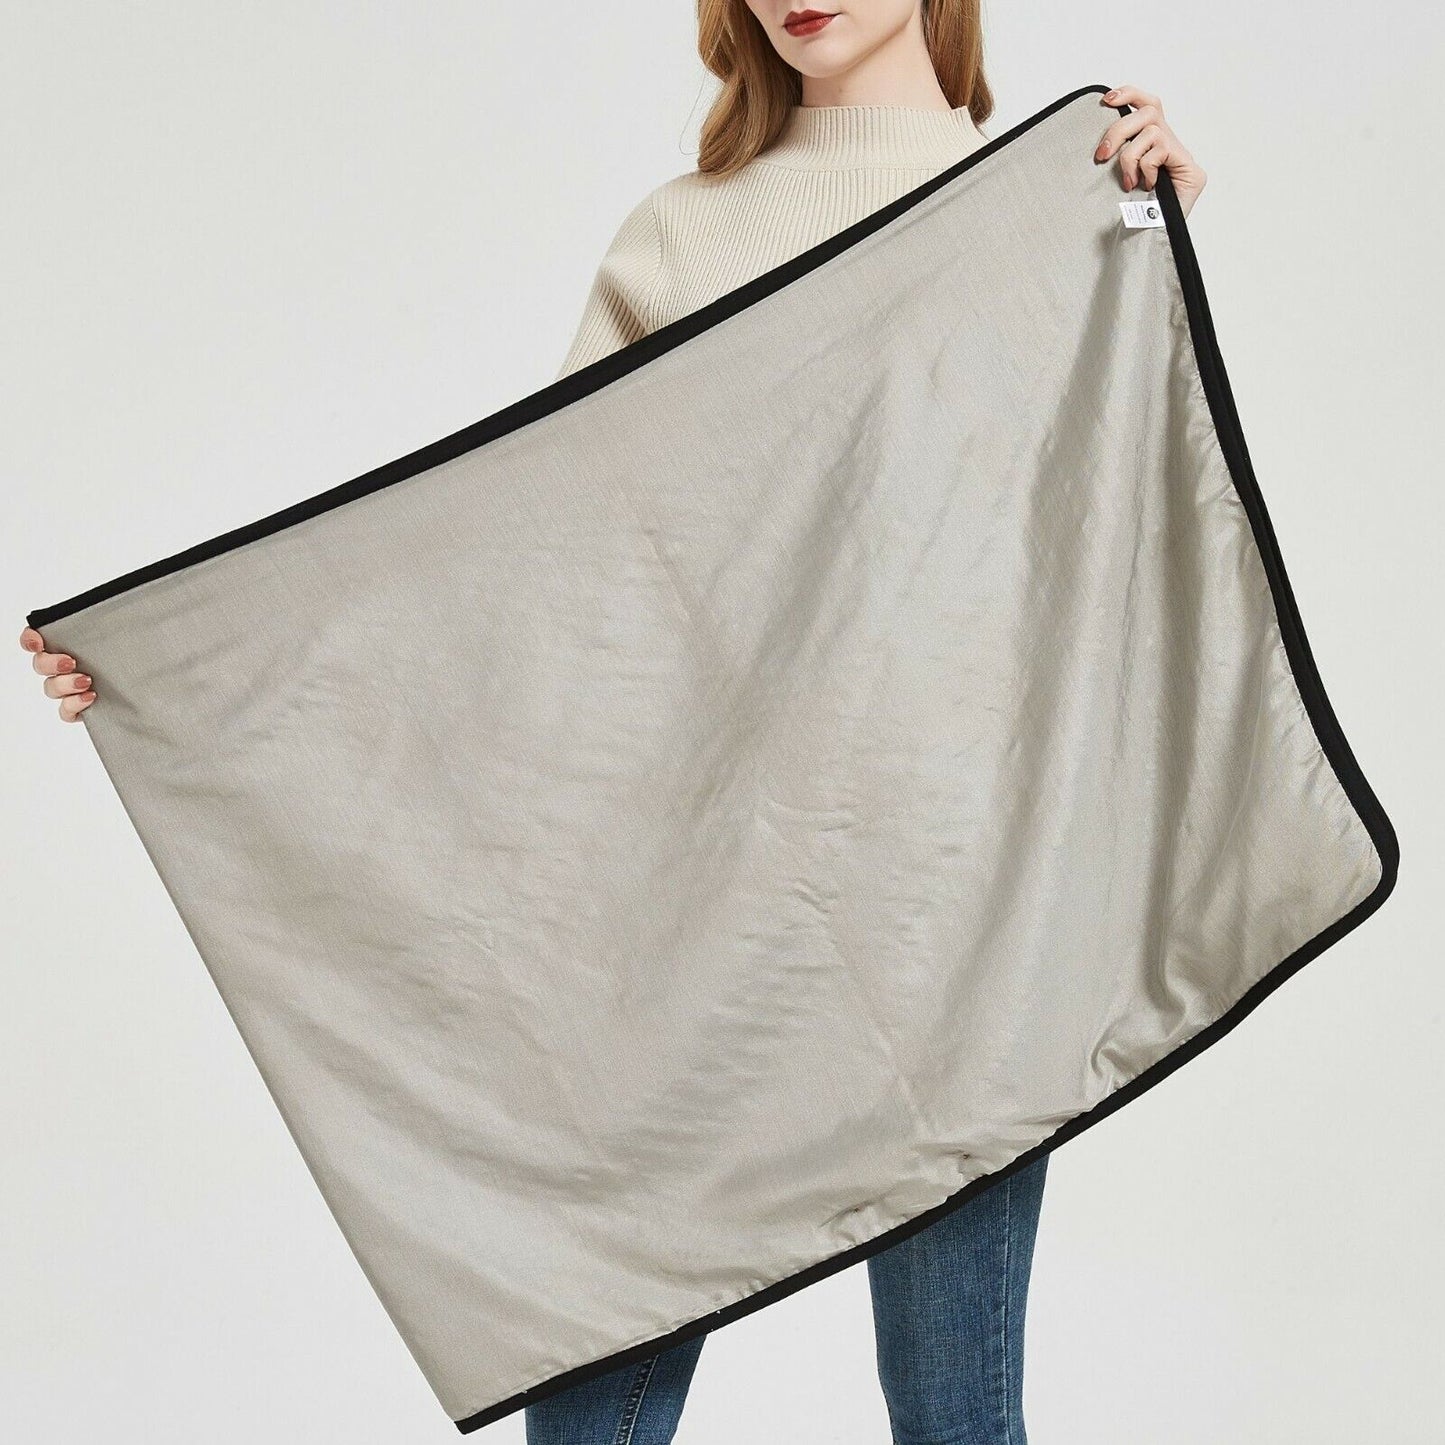 EMF Protection Black/Gray Anti-Radiation Poncho Scarves Wrap Large Blanket Blocks 5G WiFi RF Organic Cotton Women Pregnancy Scarf Hooded